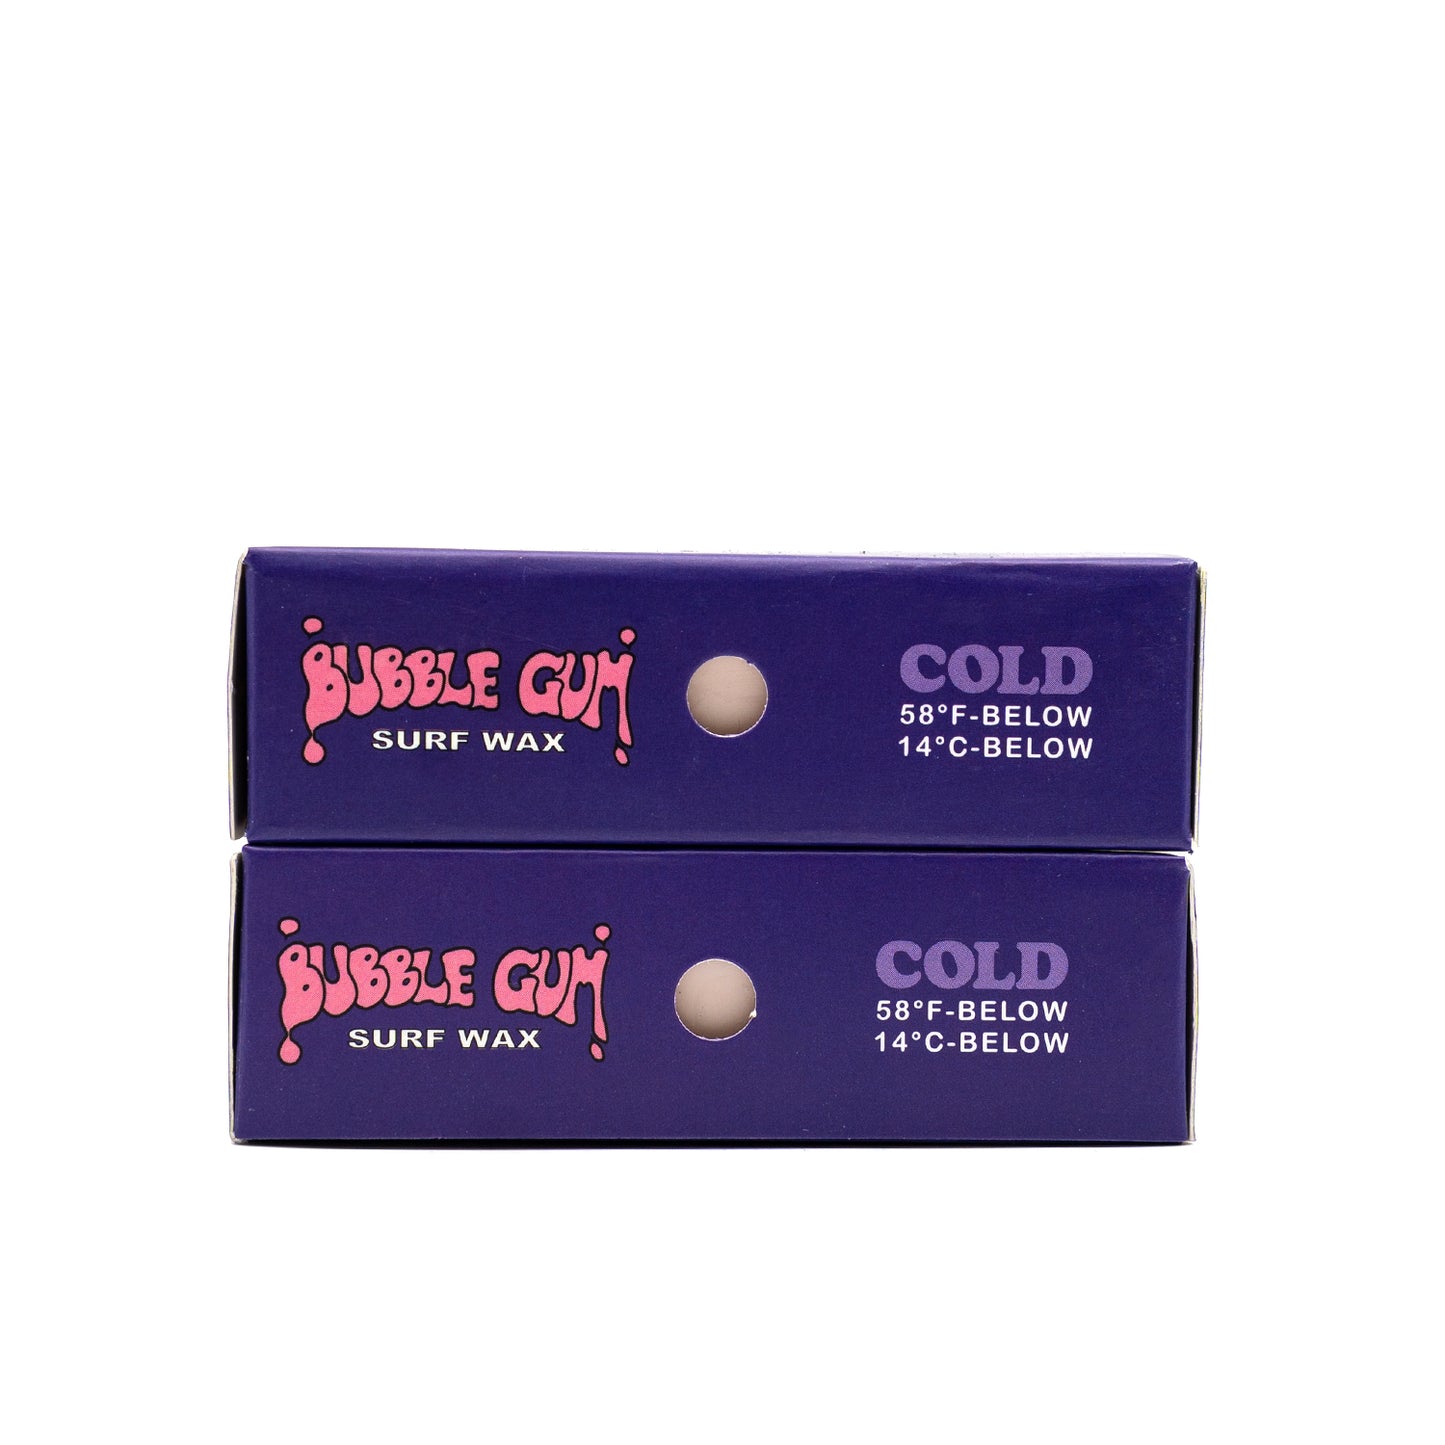 Bubble Gum "Original Formula" Surf Wax Box - Cold - 58° & Below - 6 Pack